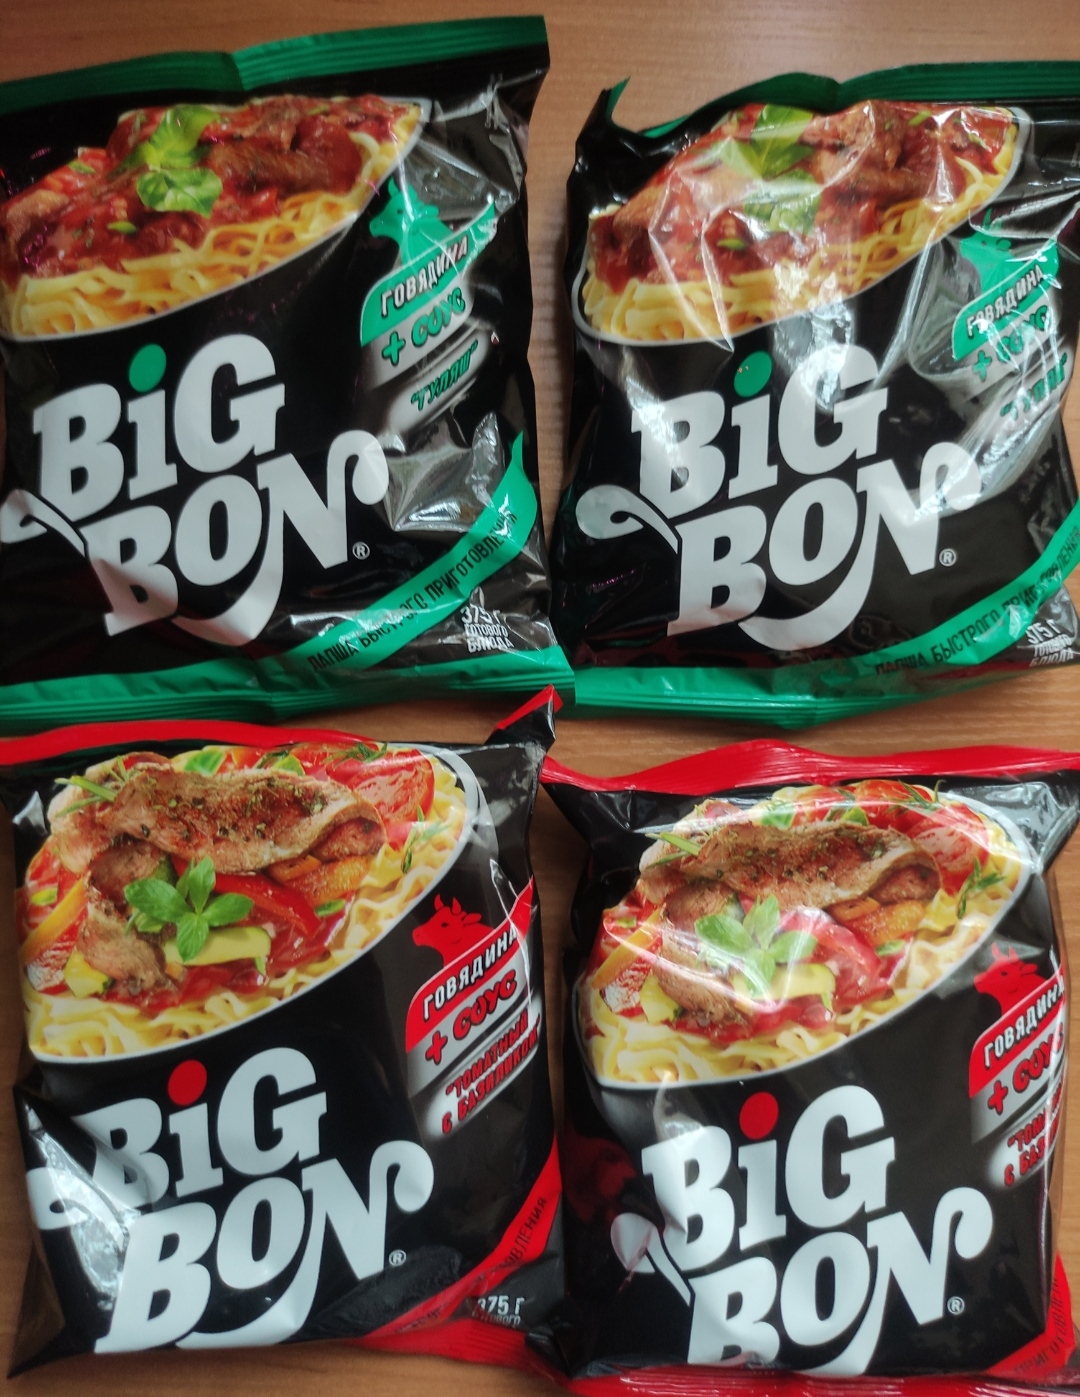 Лапша Bigbon говядина с соусом гуляш пакет 75 г - отзывы покупателей намаркетплейсе Мегамаркет